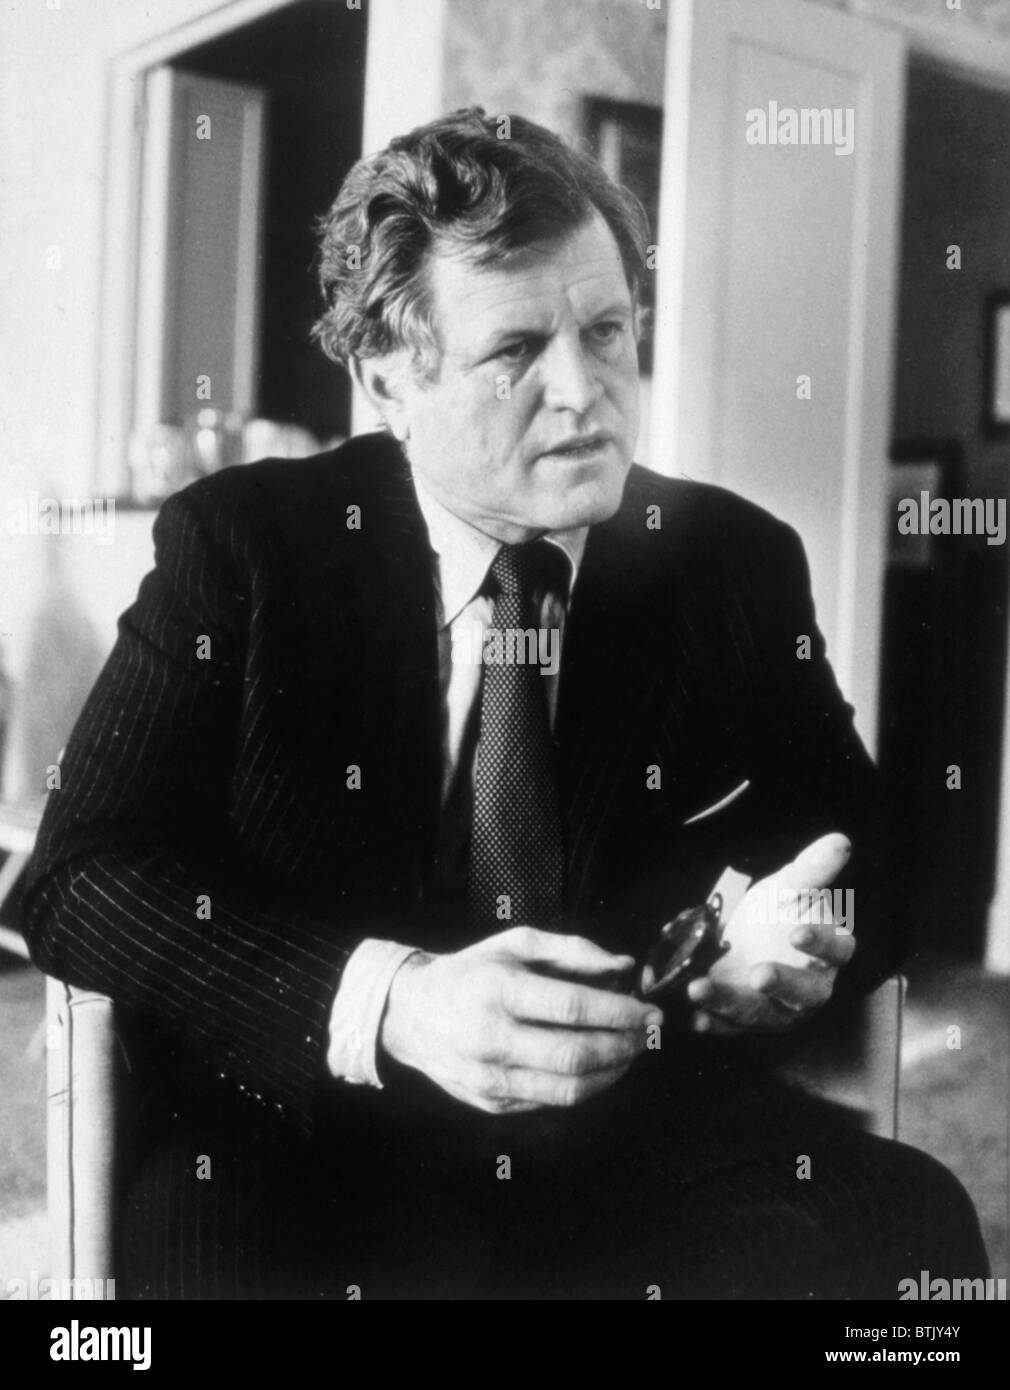 Senator Ted Kennedy, ca. 1980. Stock Photo